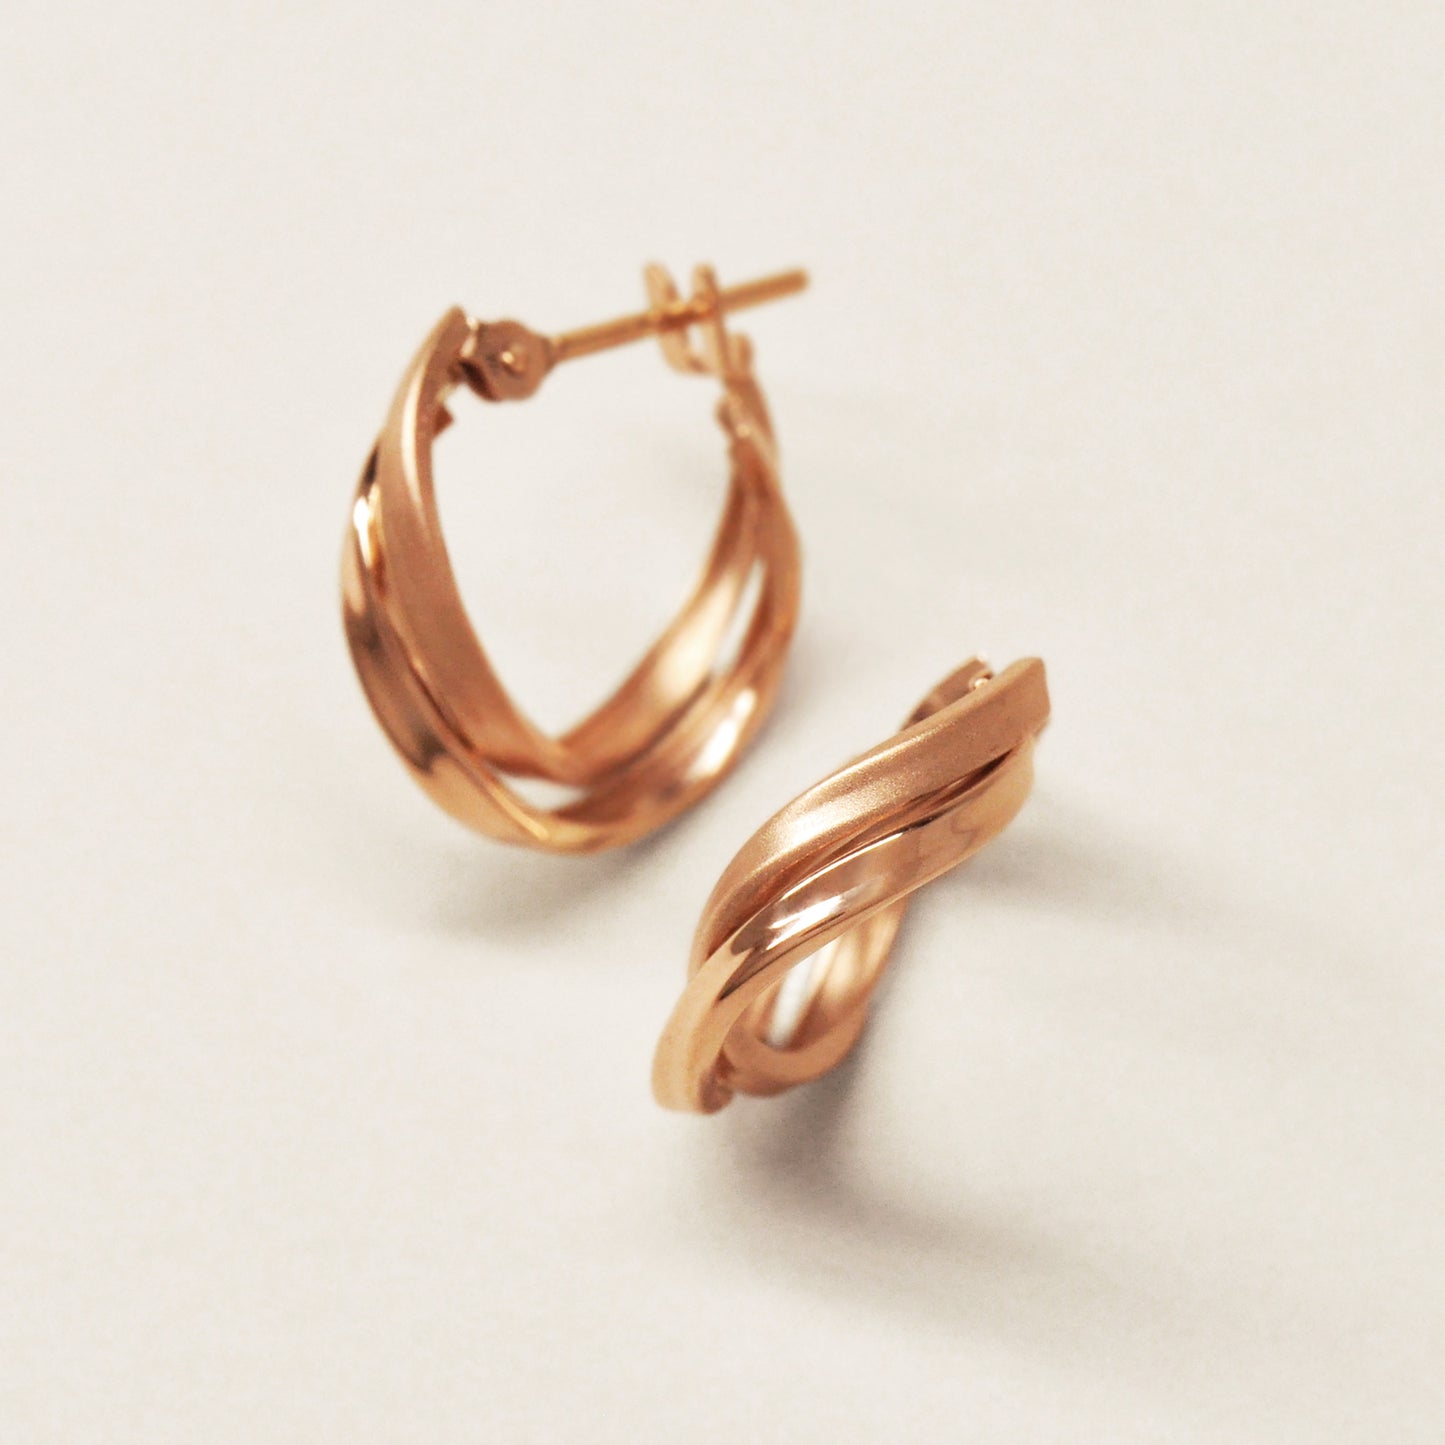 18K/10K Rose Gold Twisted Twin Hoop Earrings - Product Image